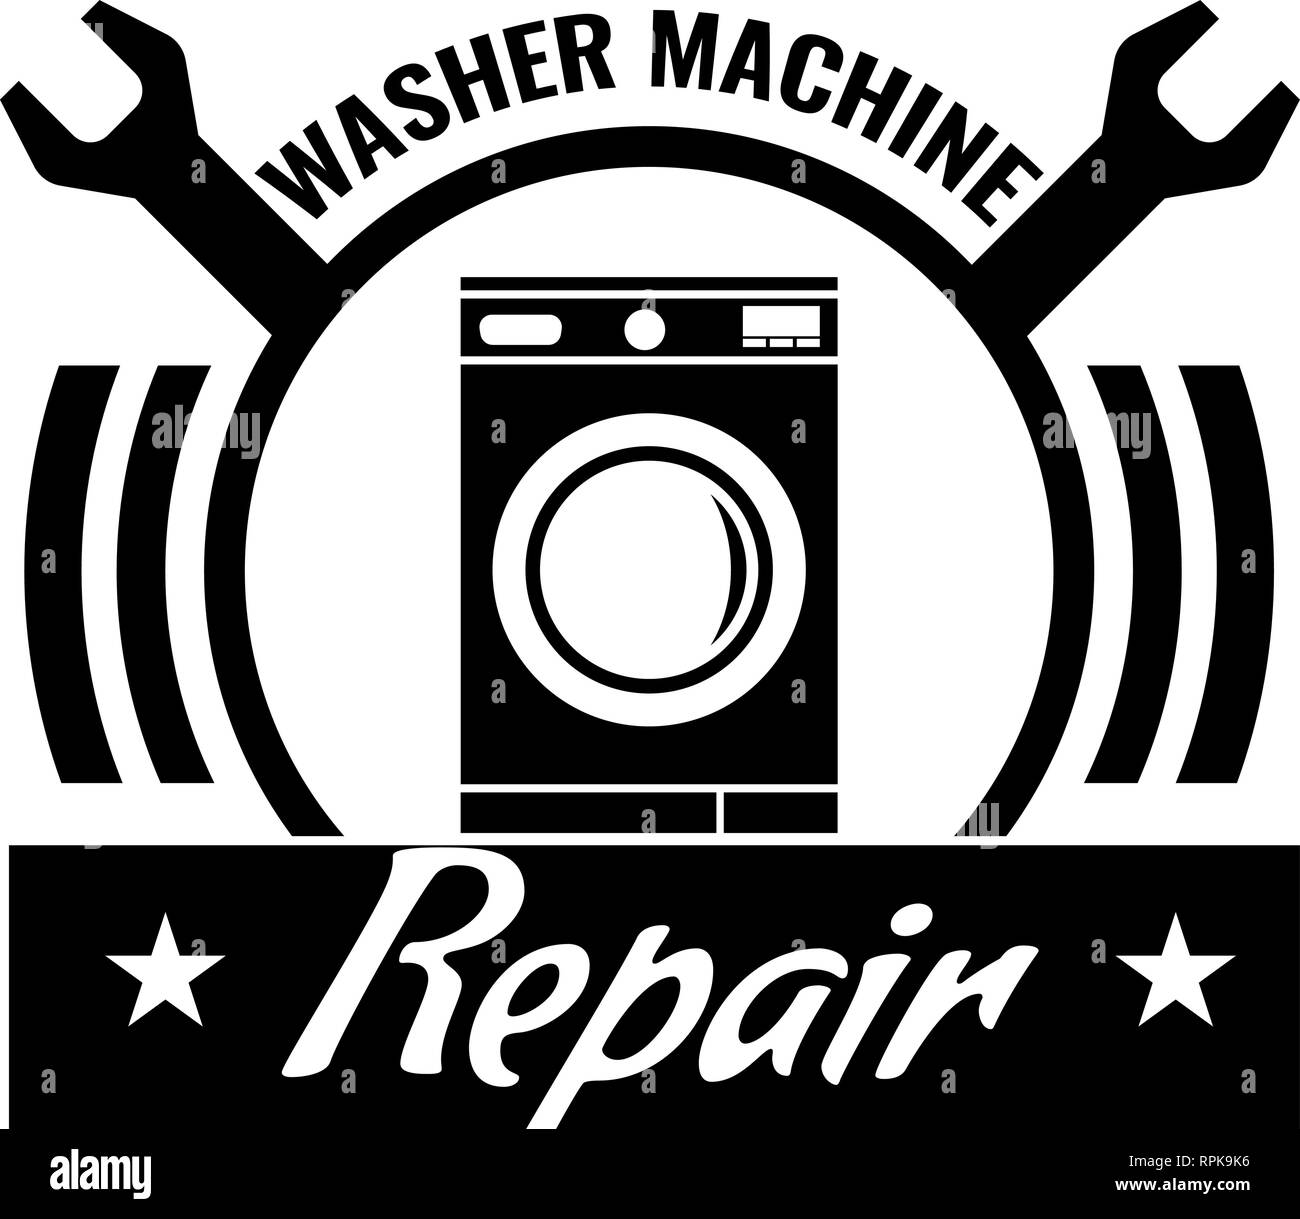 Washing machine repair icon or logo concept. Washing machine repair symbol. Vector illustration. Stock Vector